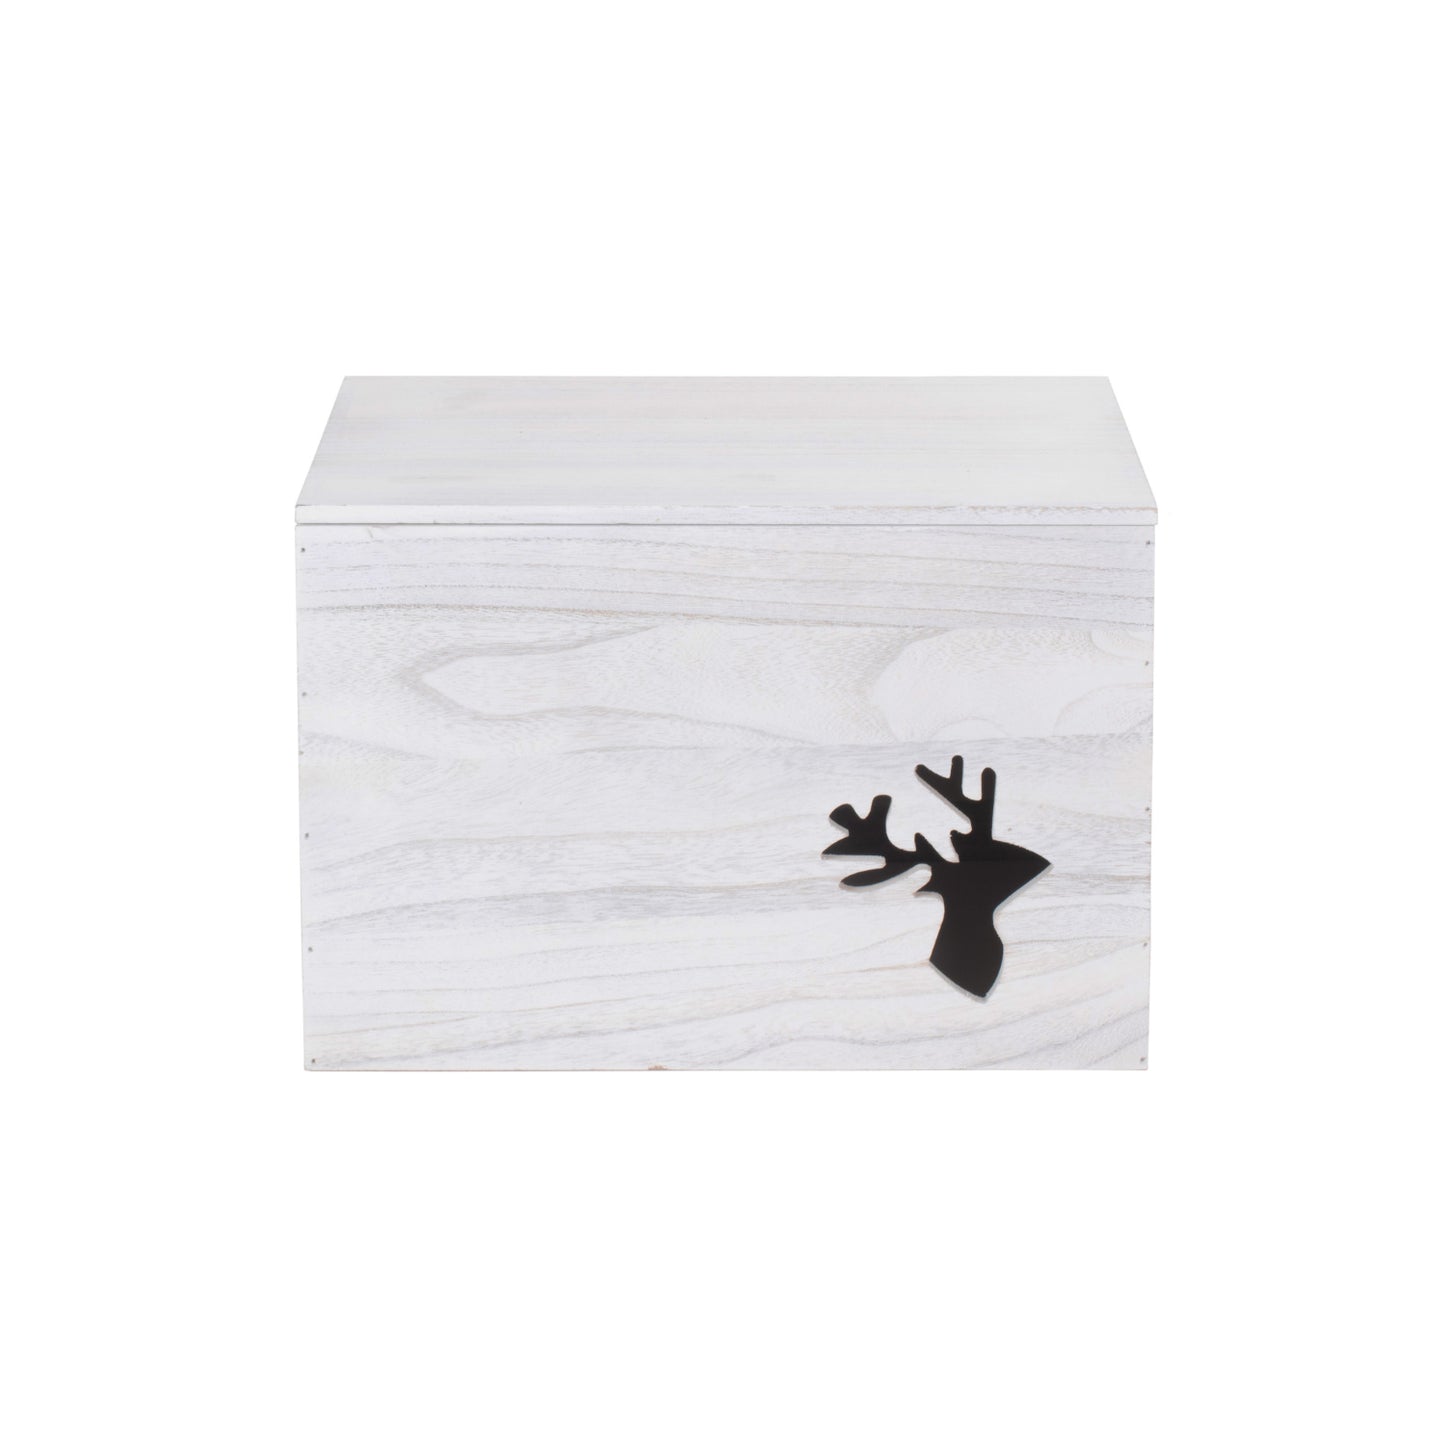 Reindeer Cut-out Wooden Box